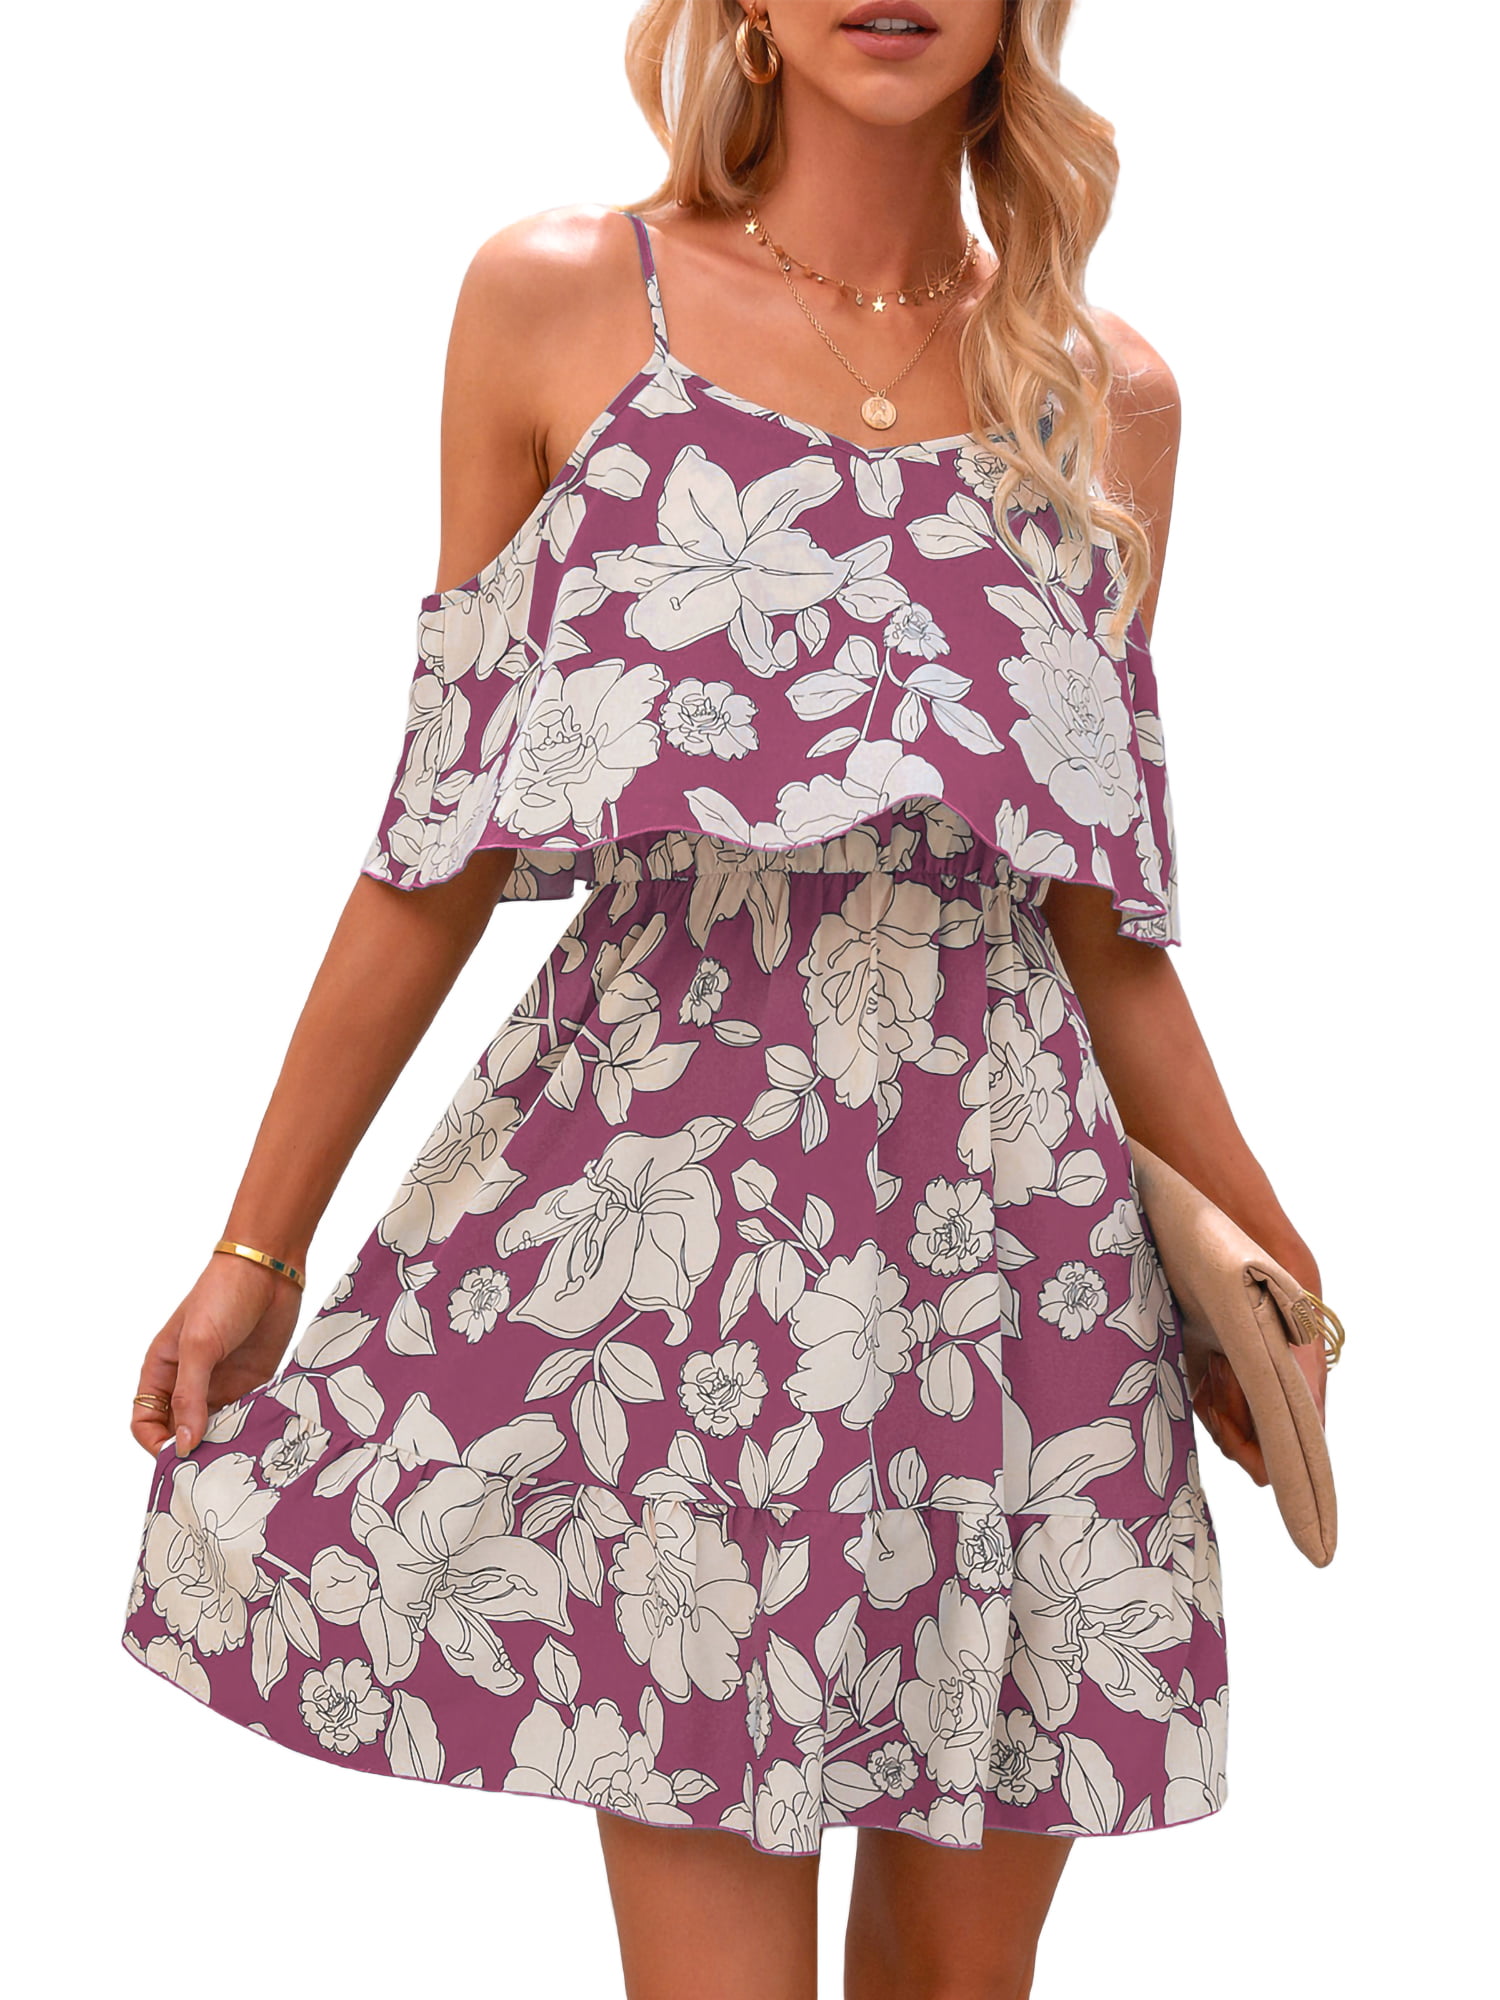 YUNDAI Women Summer Casual Sleeveless Boho Floral Elastic Sundress Loose Swing Short Dress with Pockets 